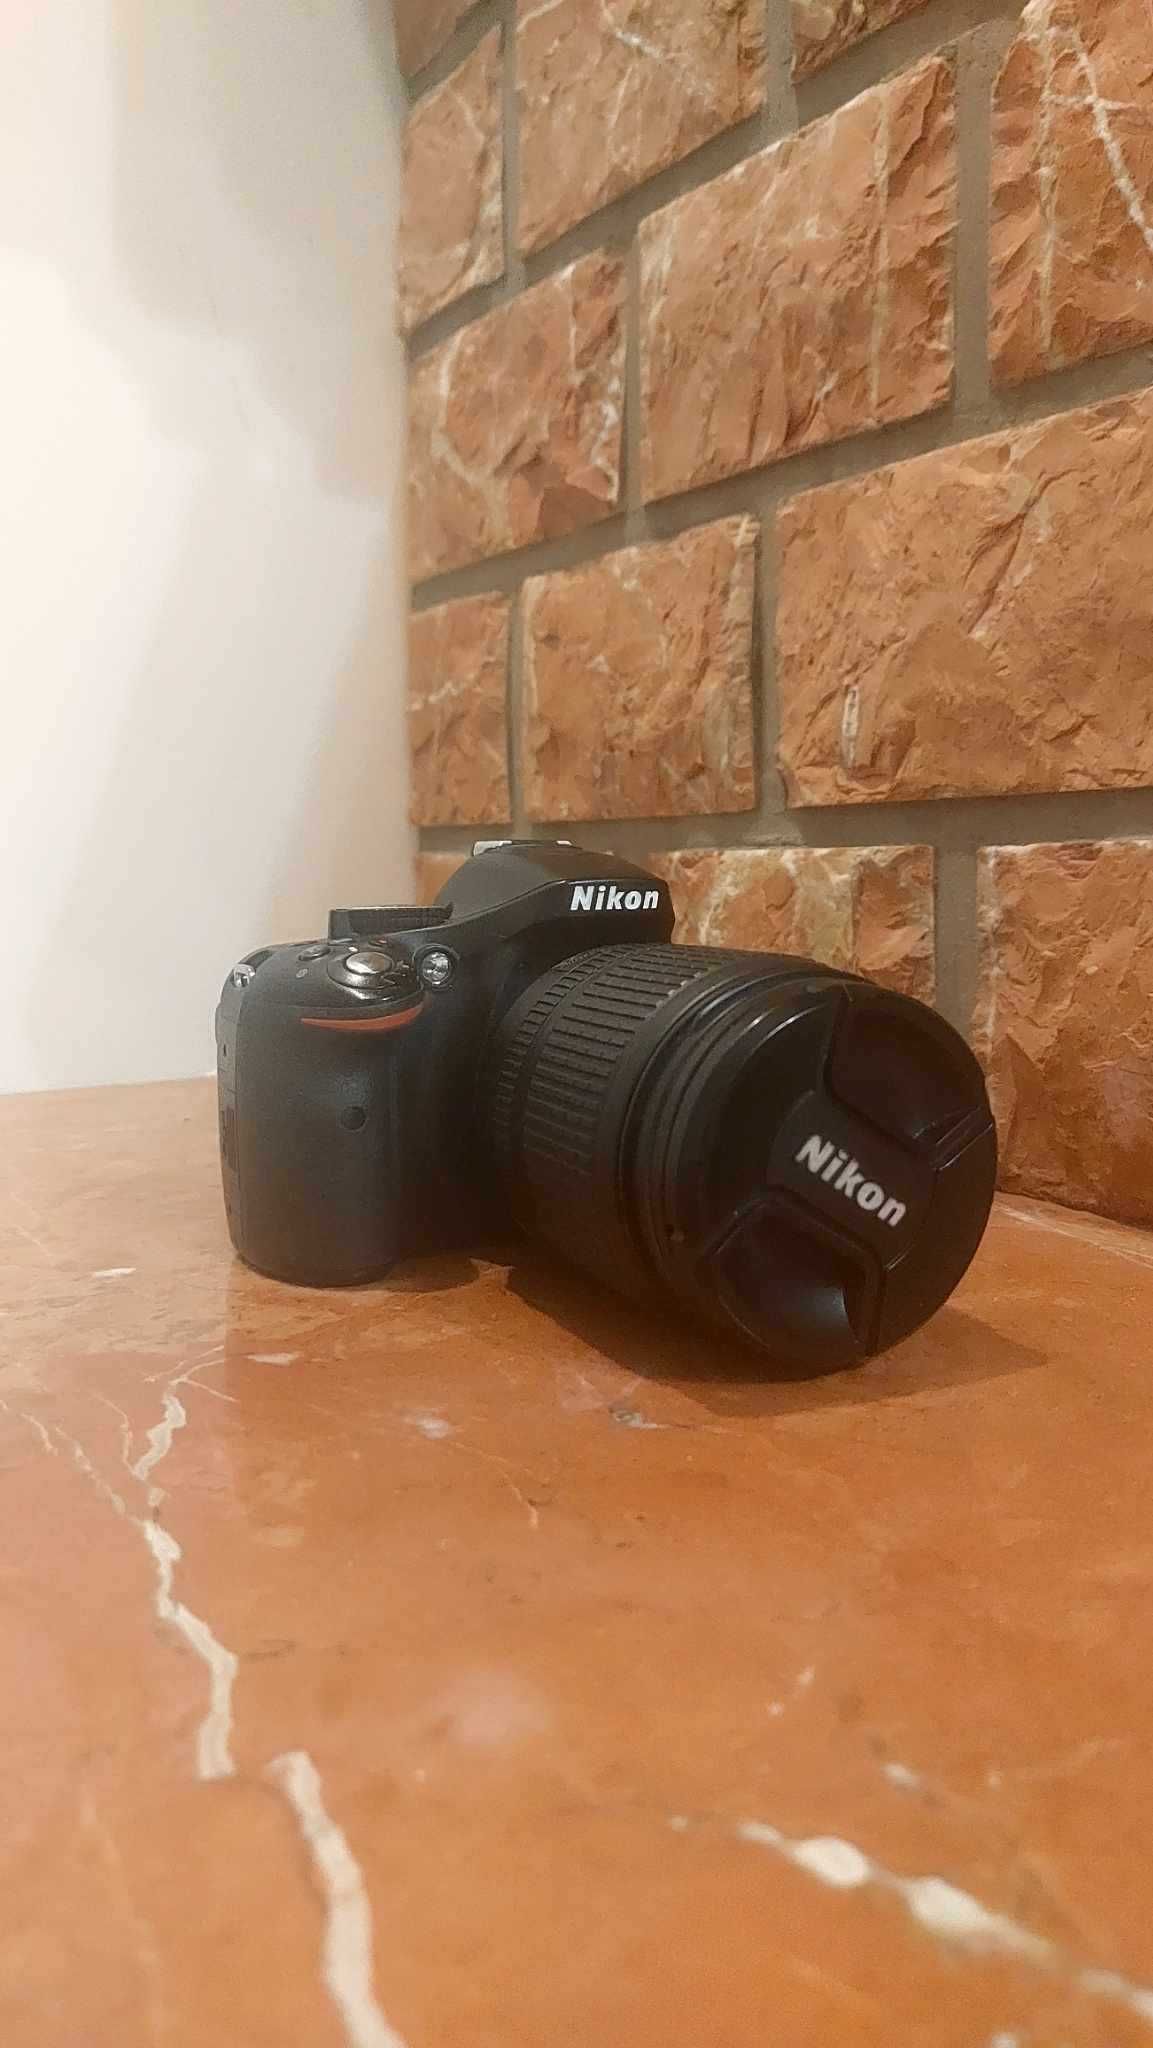 Nikon d5200 + nikkor 18-105